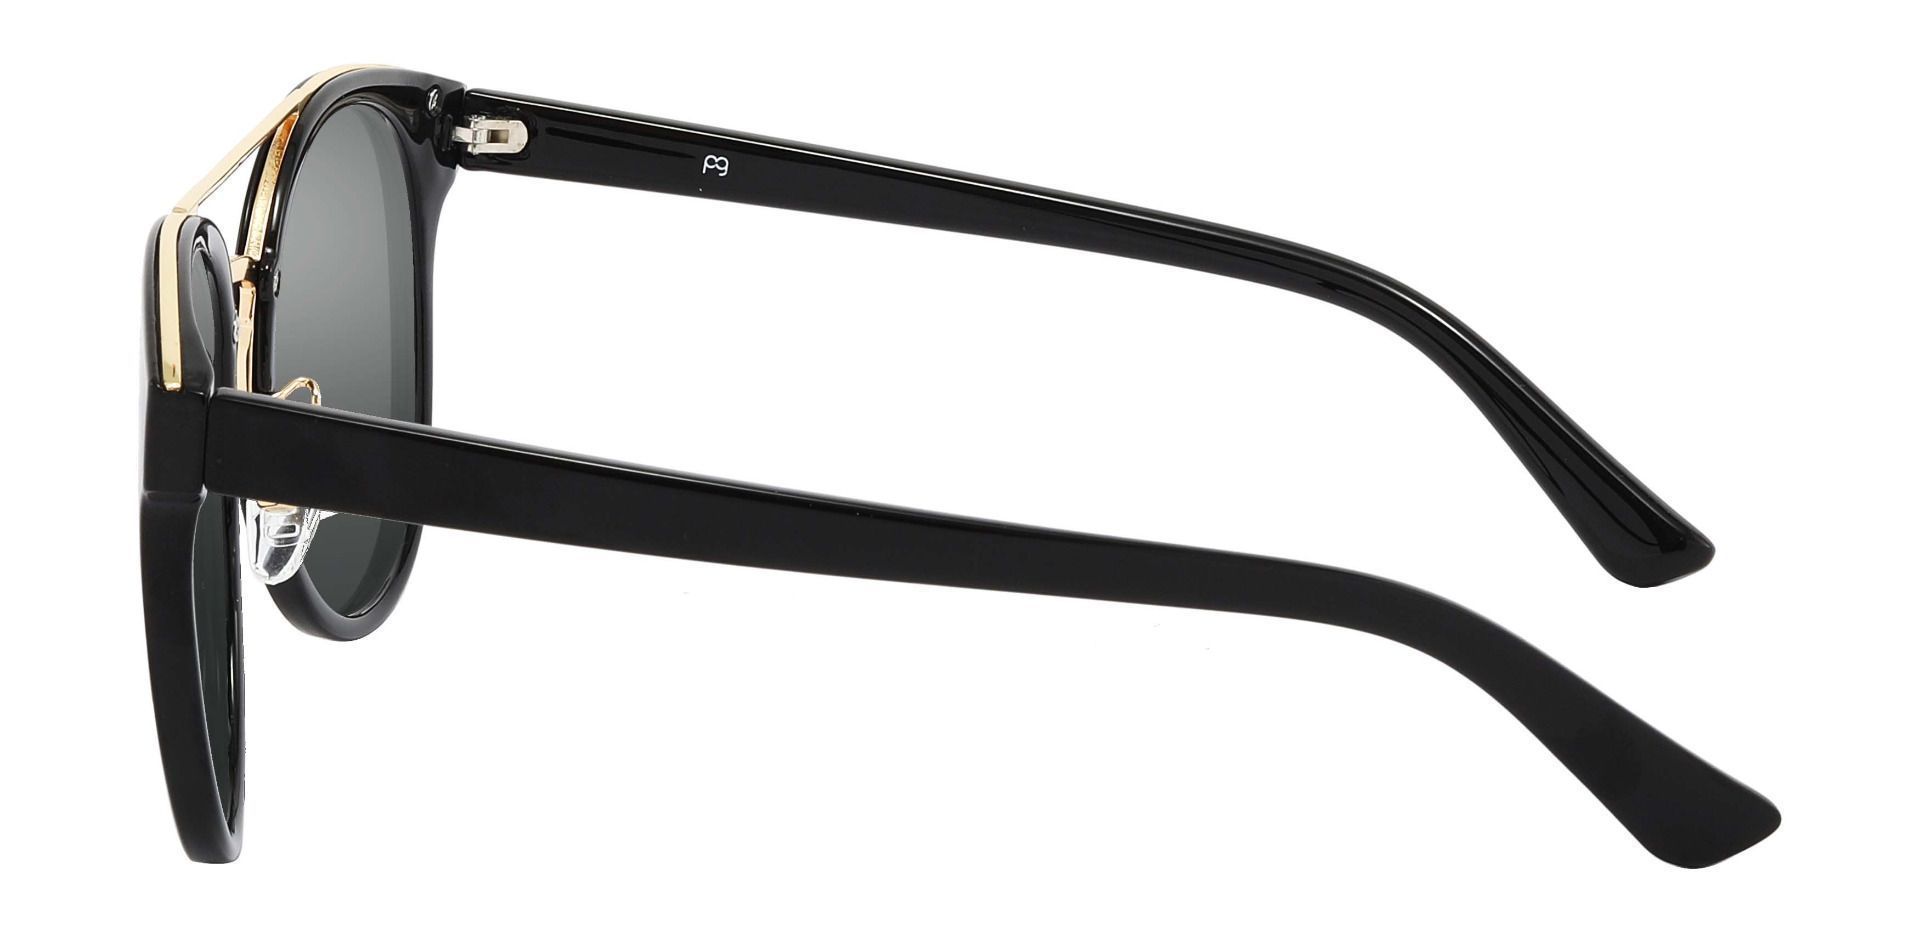 Oasis Aviator Prescription Sunglasses - Black Frame With Gray Lenses